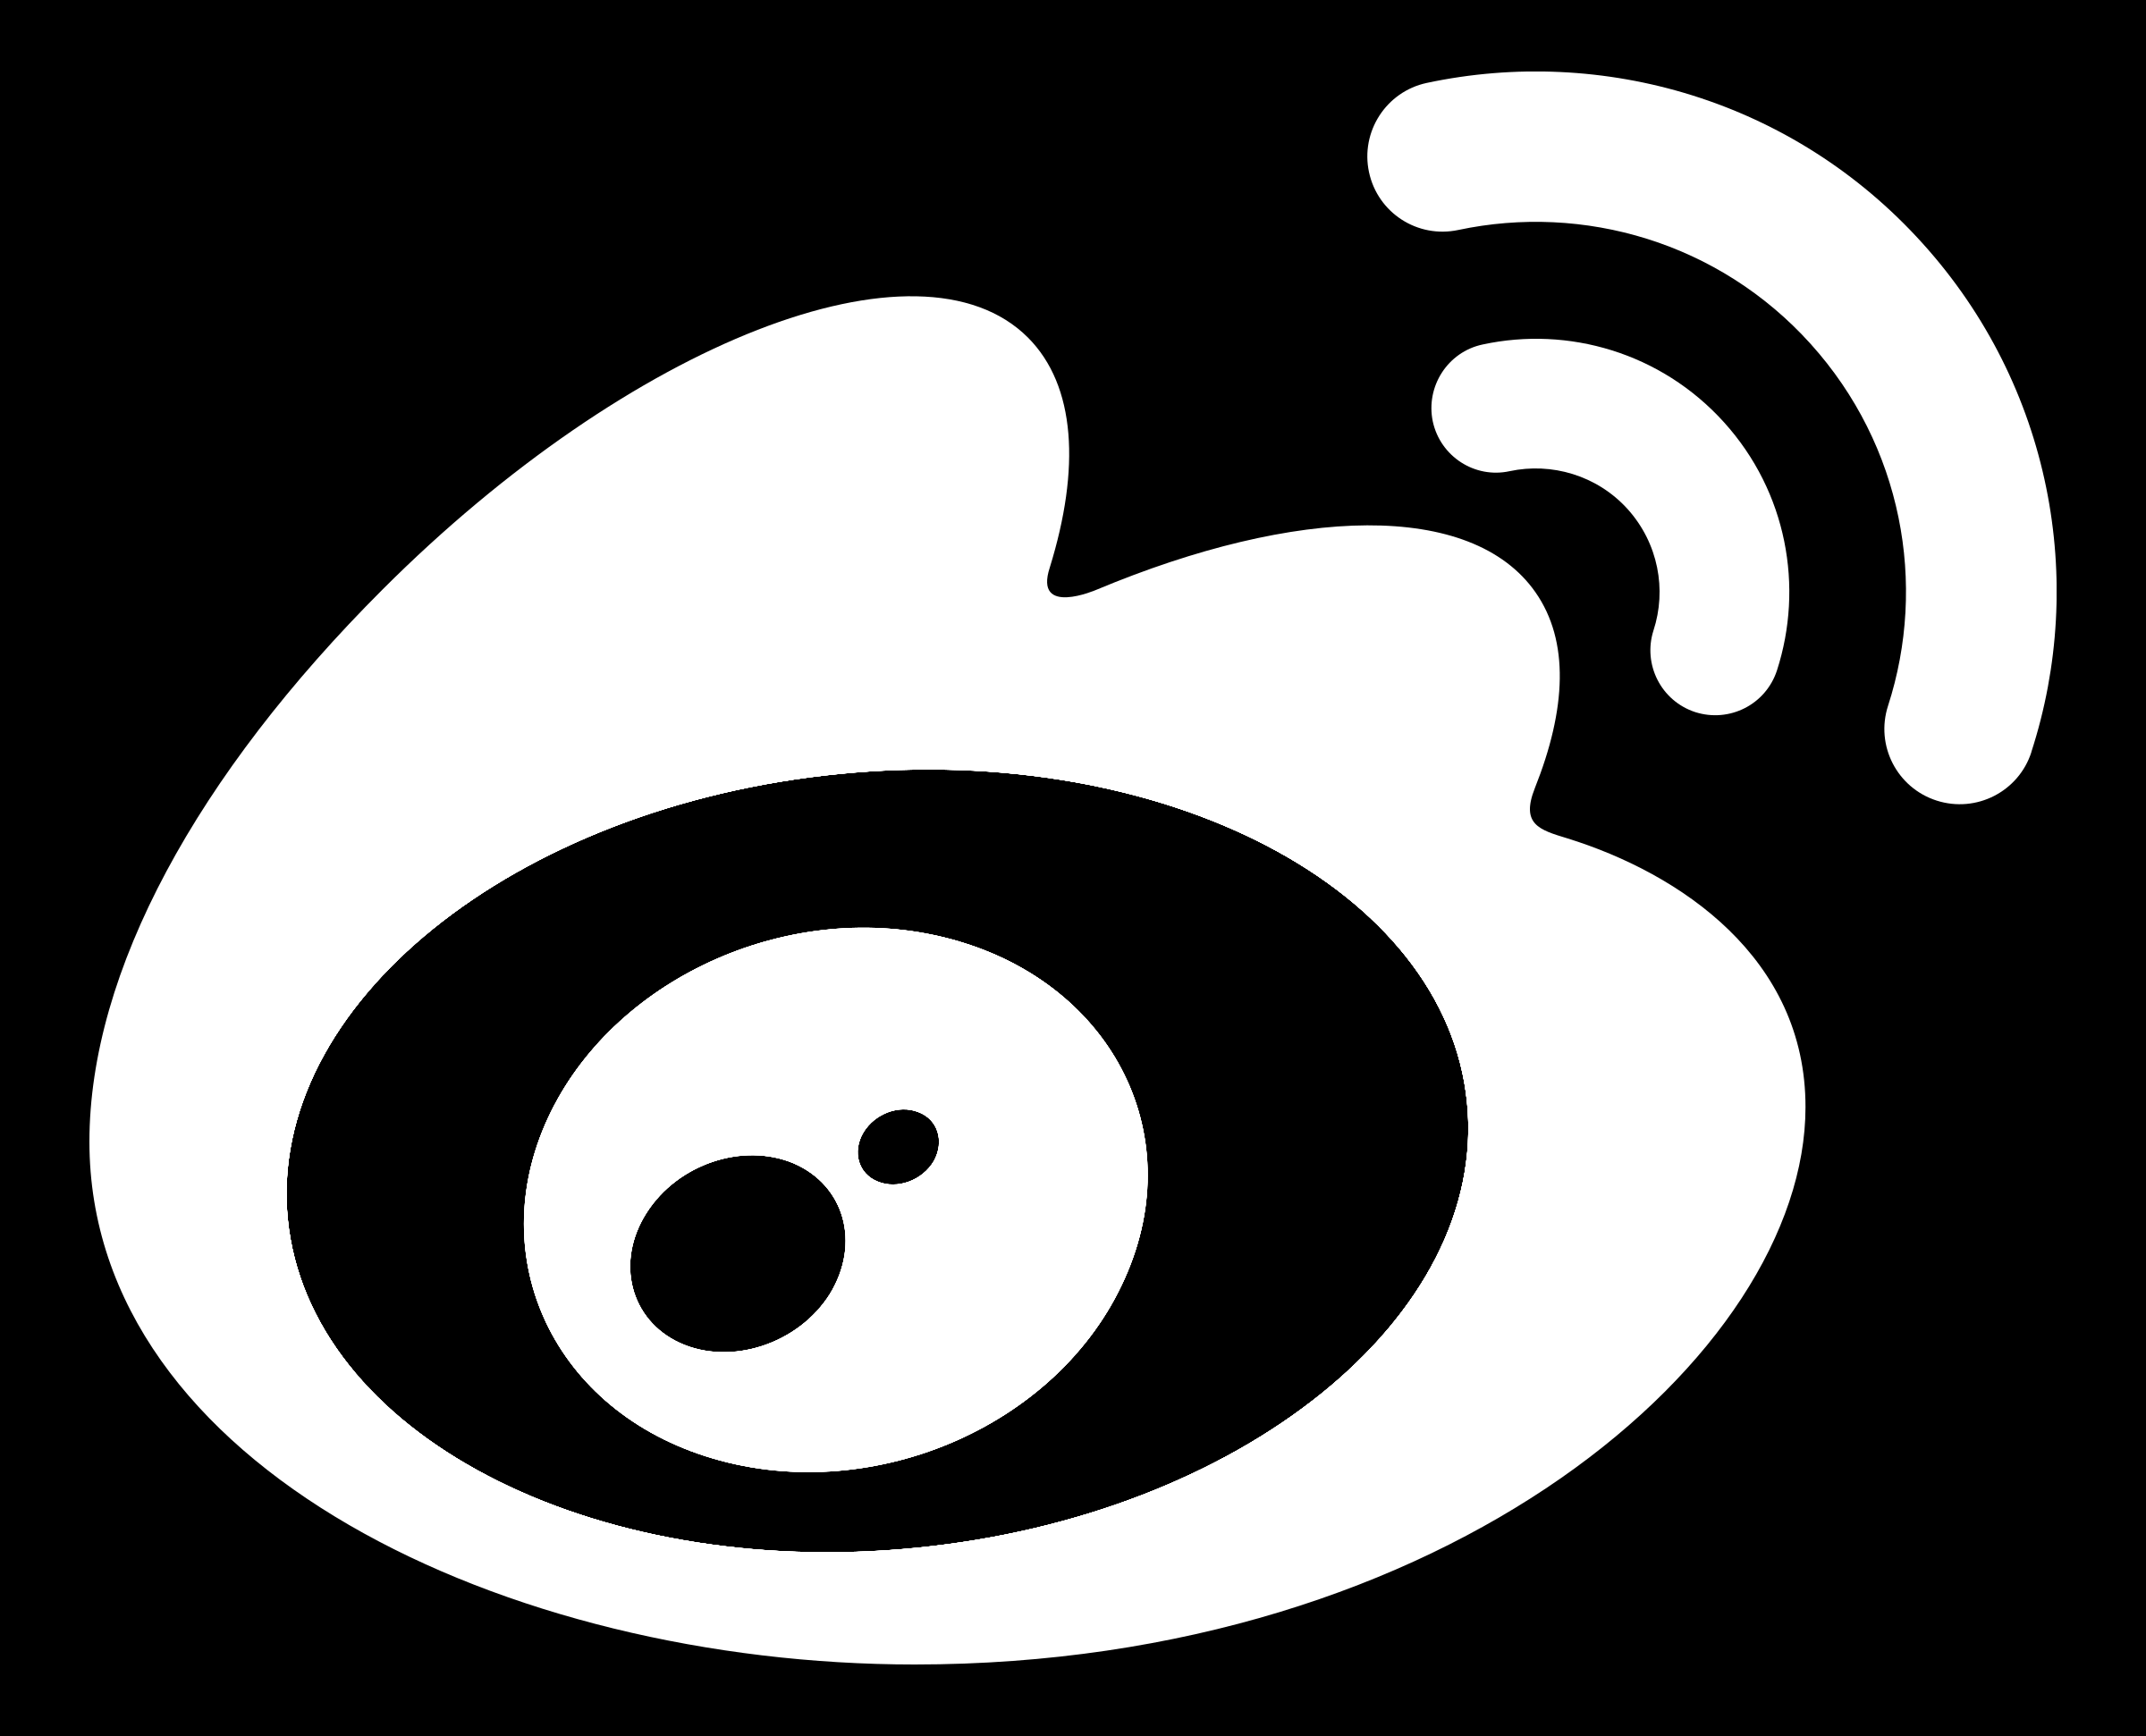 Weibo Logo - Weibo Logo PNG Transparent & SVG Vector